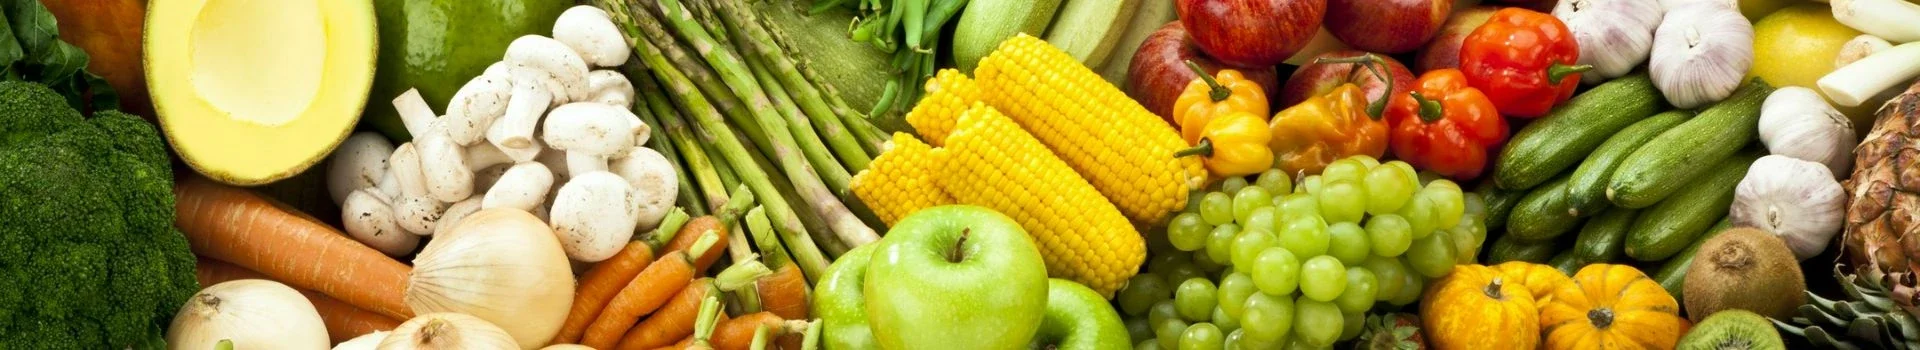 owoce i warzywa 1